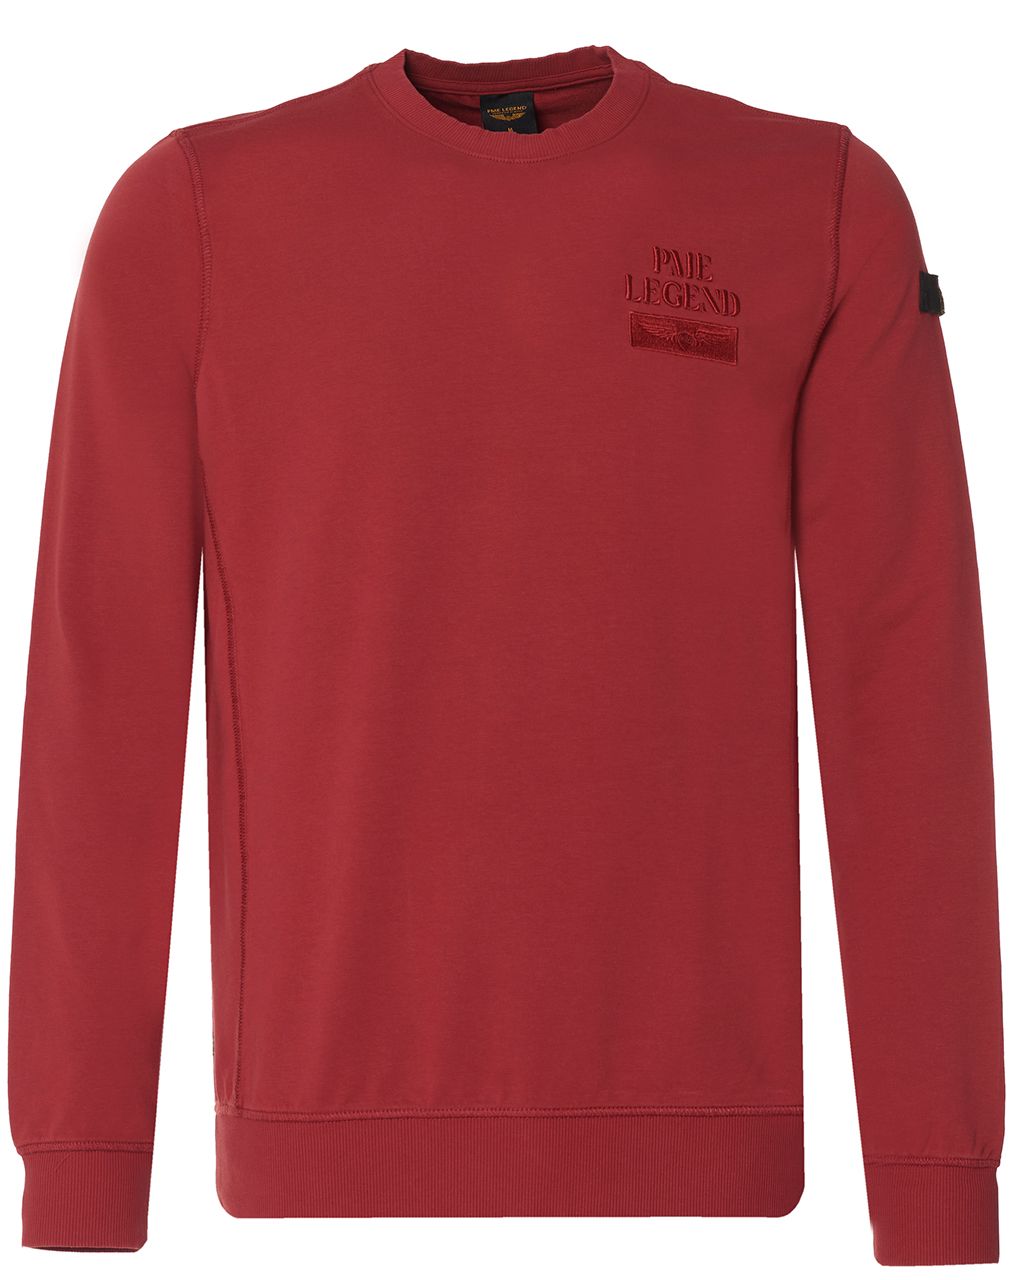 PME Legend Sweater Rood 076102-001-L